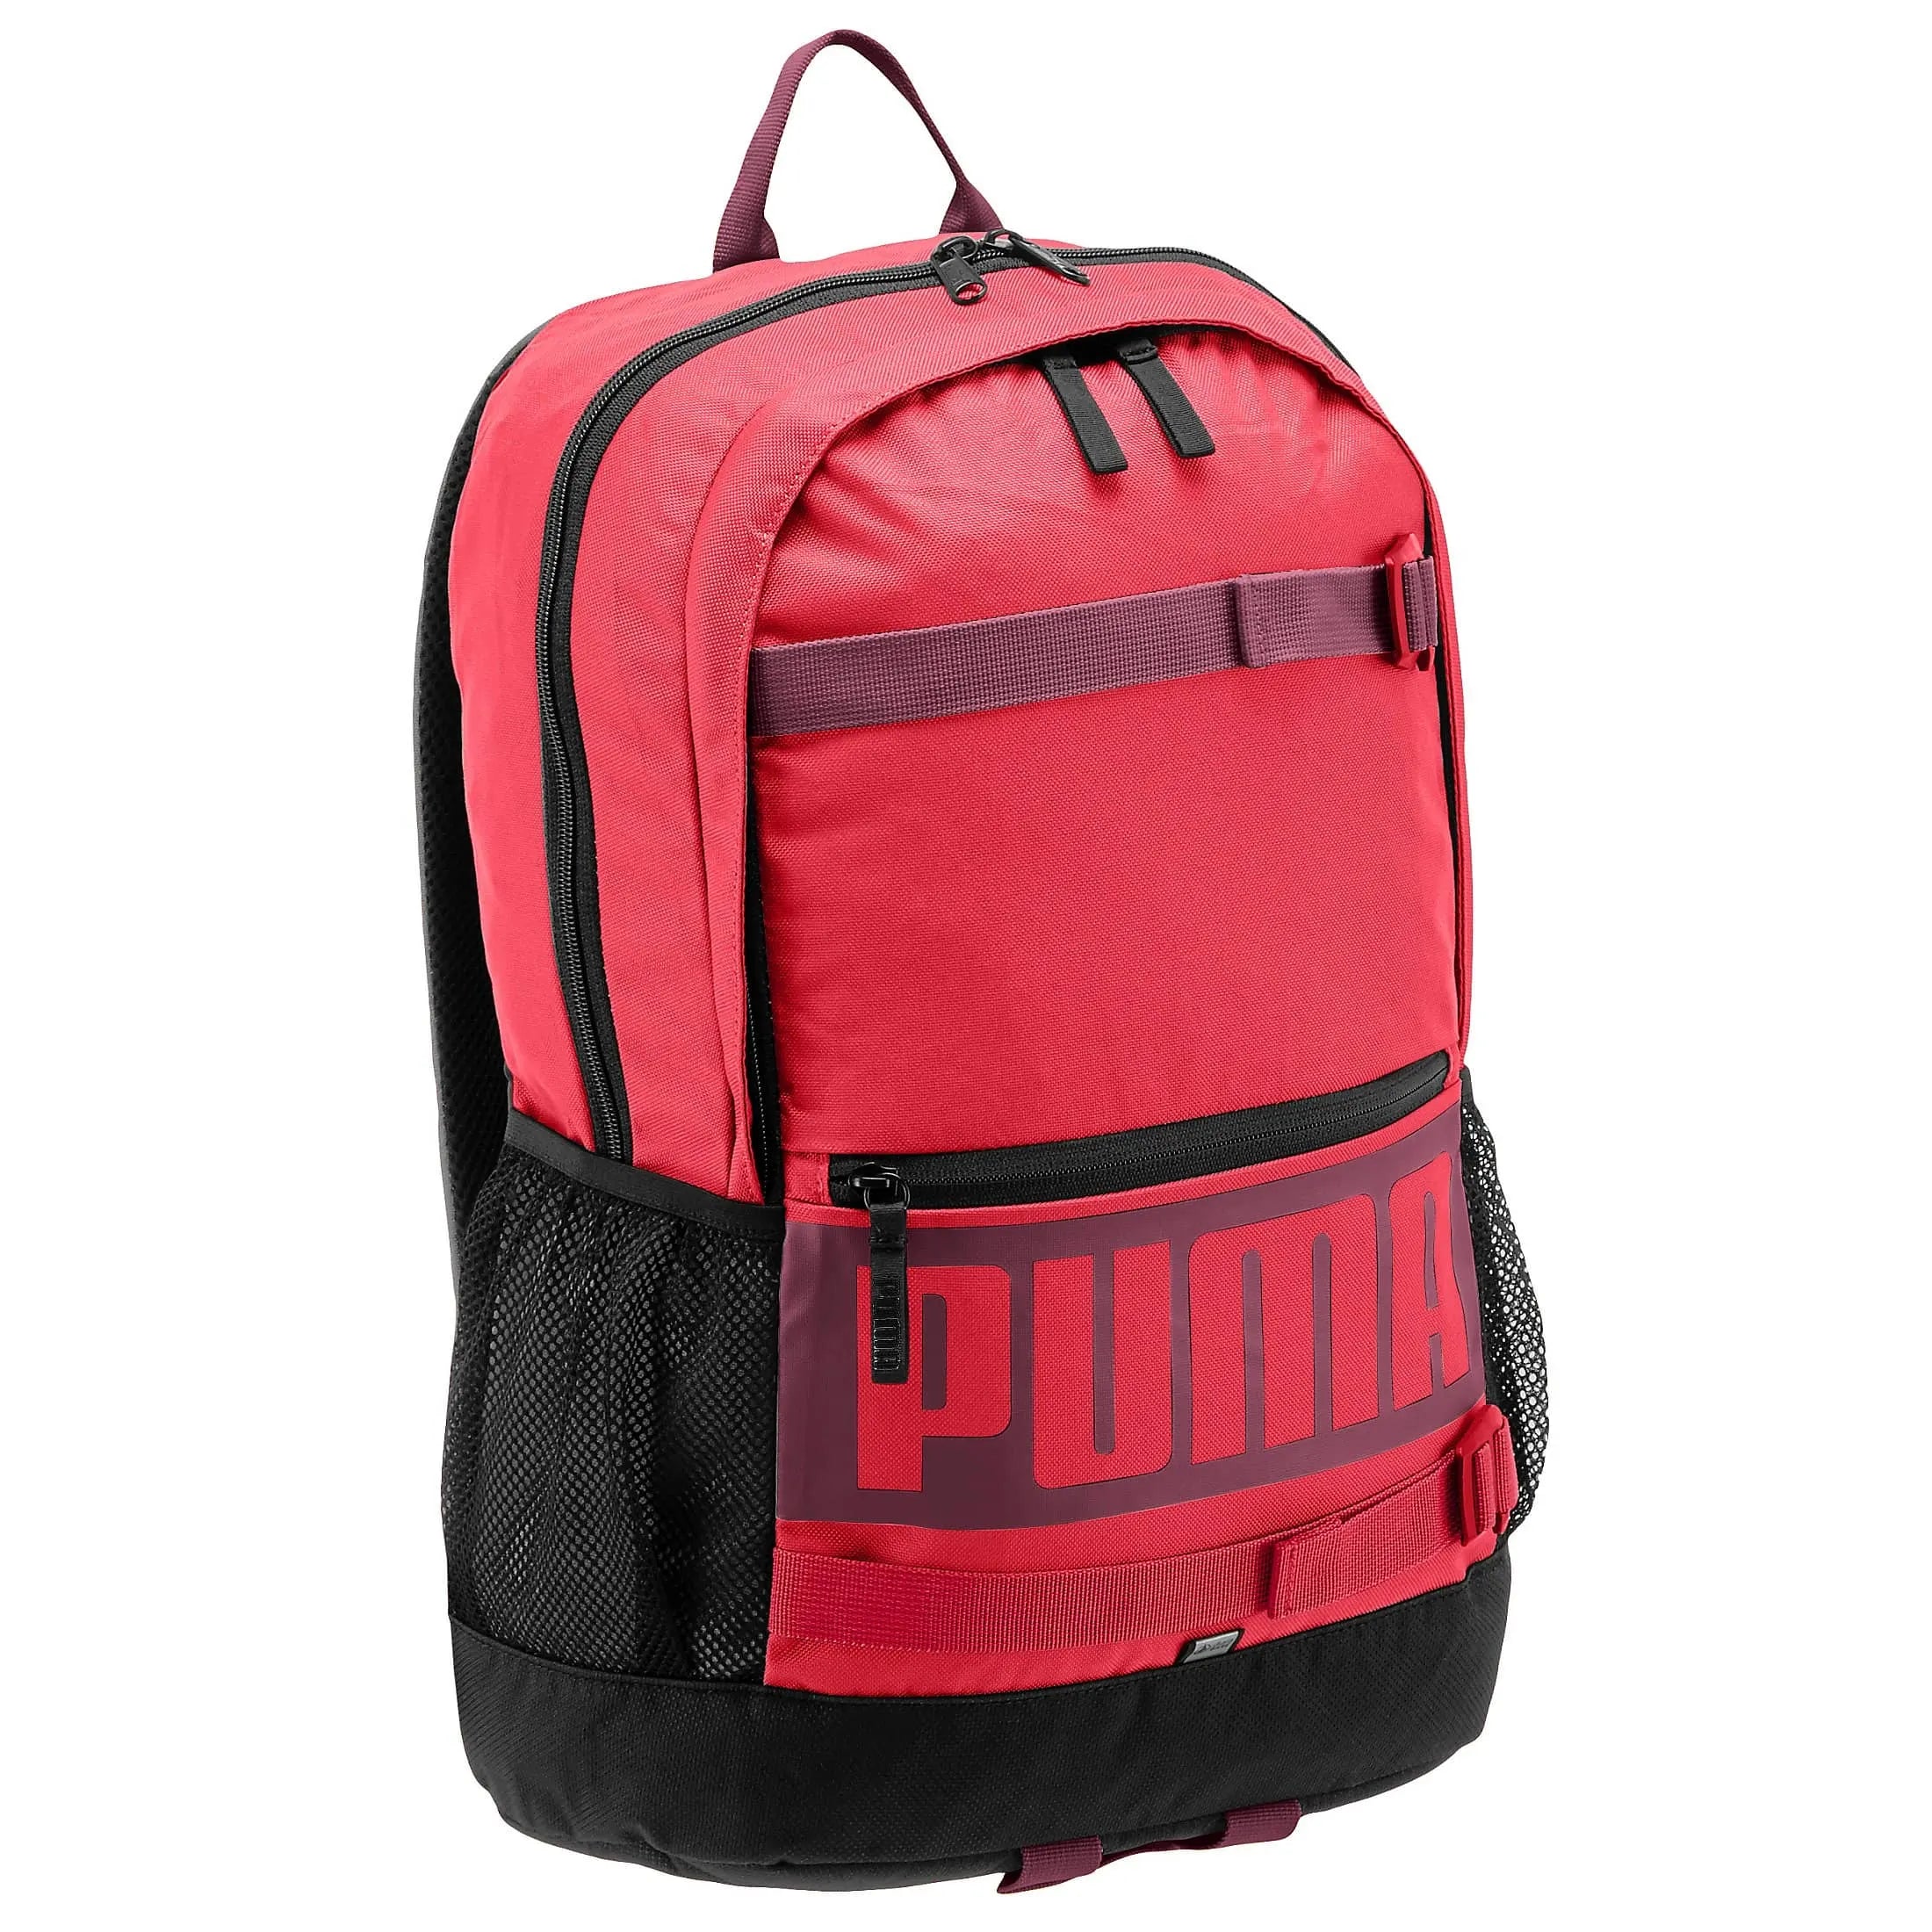 Puma Deck Backpack 46 cm - paradise pink